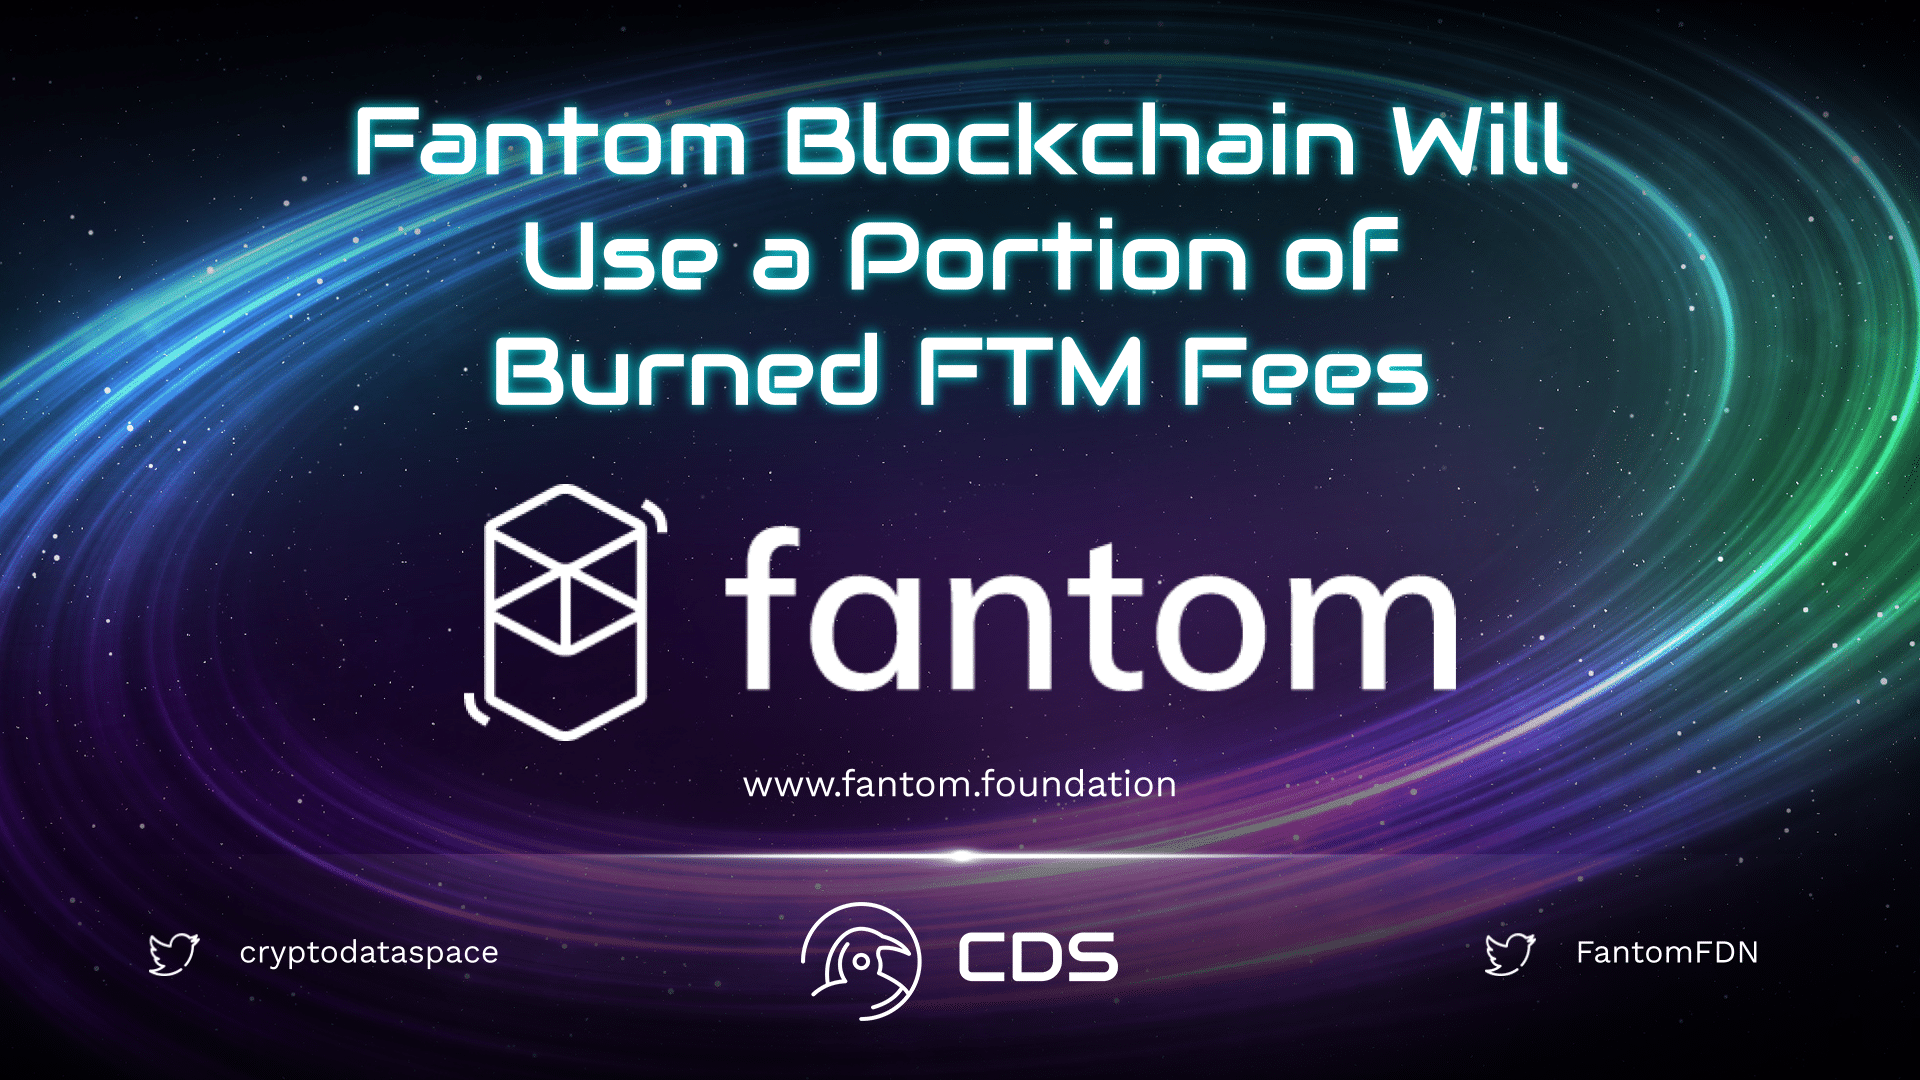 Fantom Blockchain Will Use a Portion of Burned FTM Fees